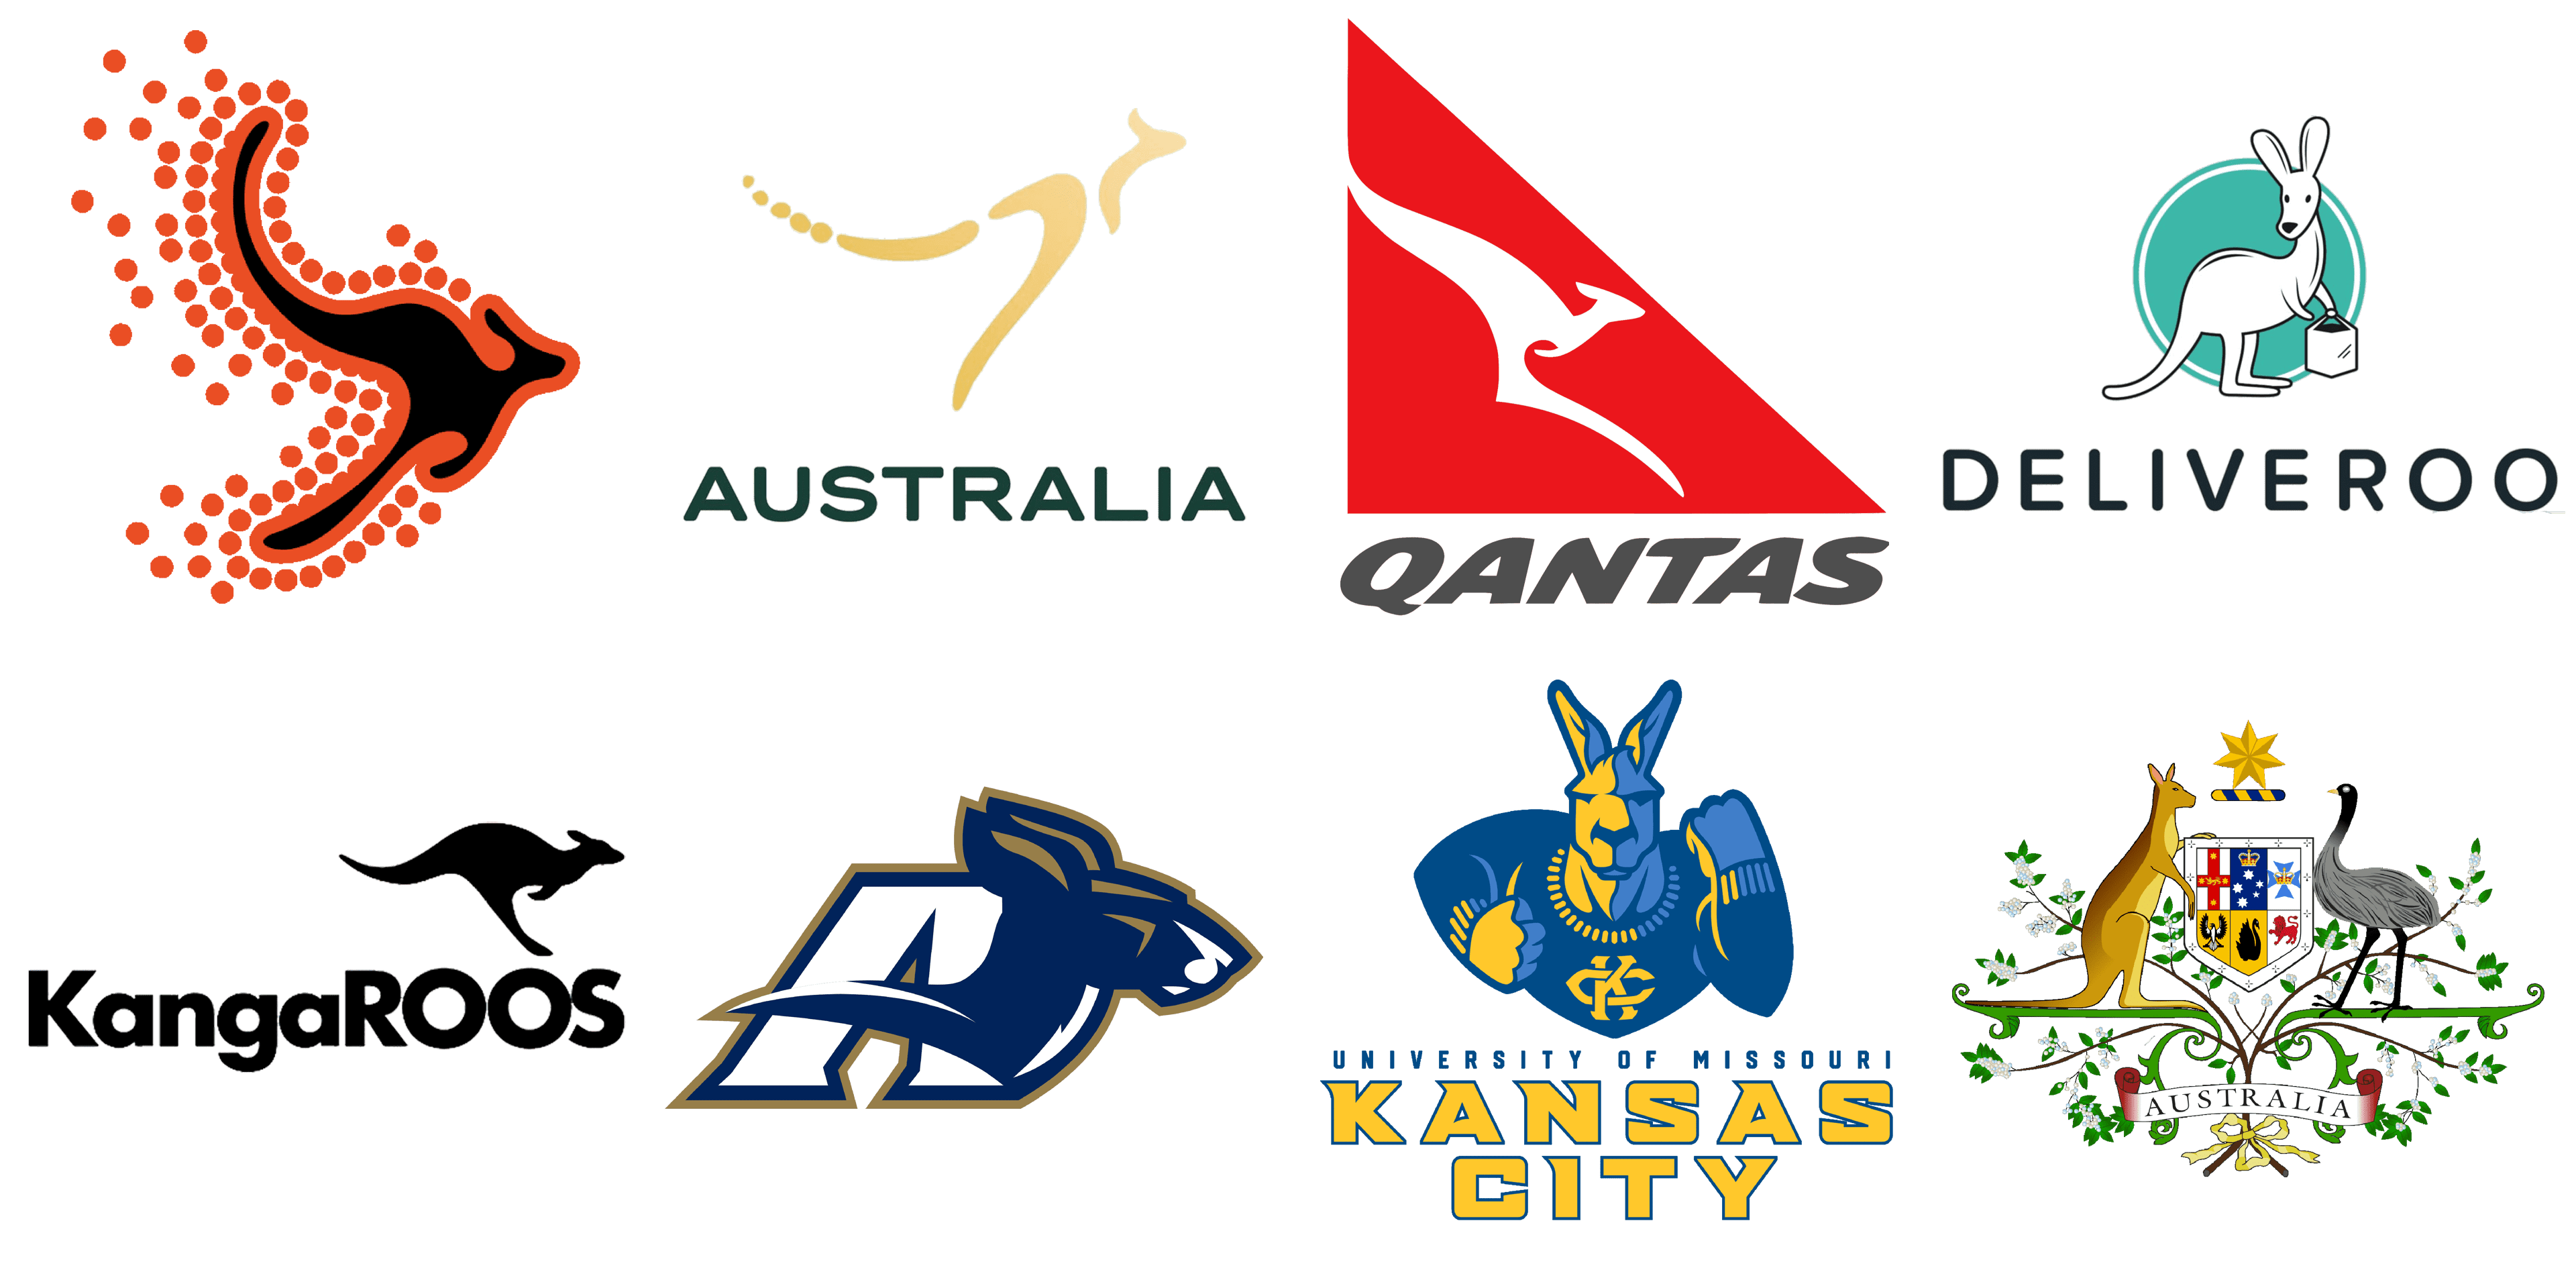 Most Logos With a Kangaroo Famous